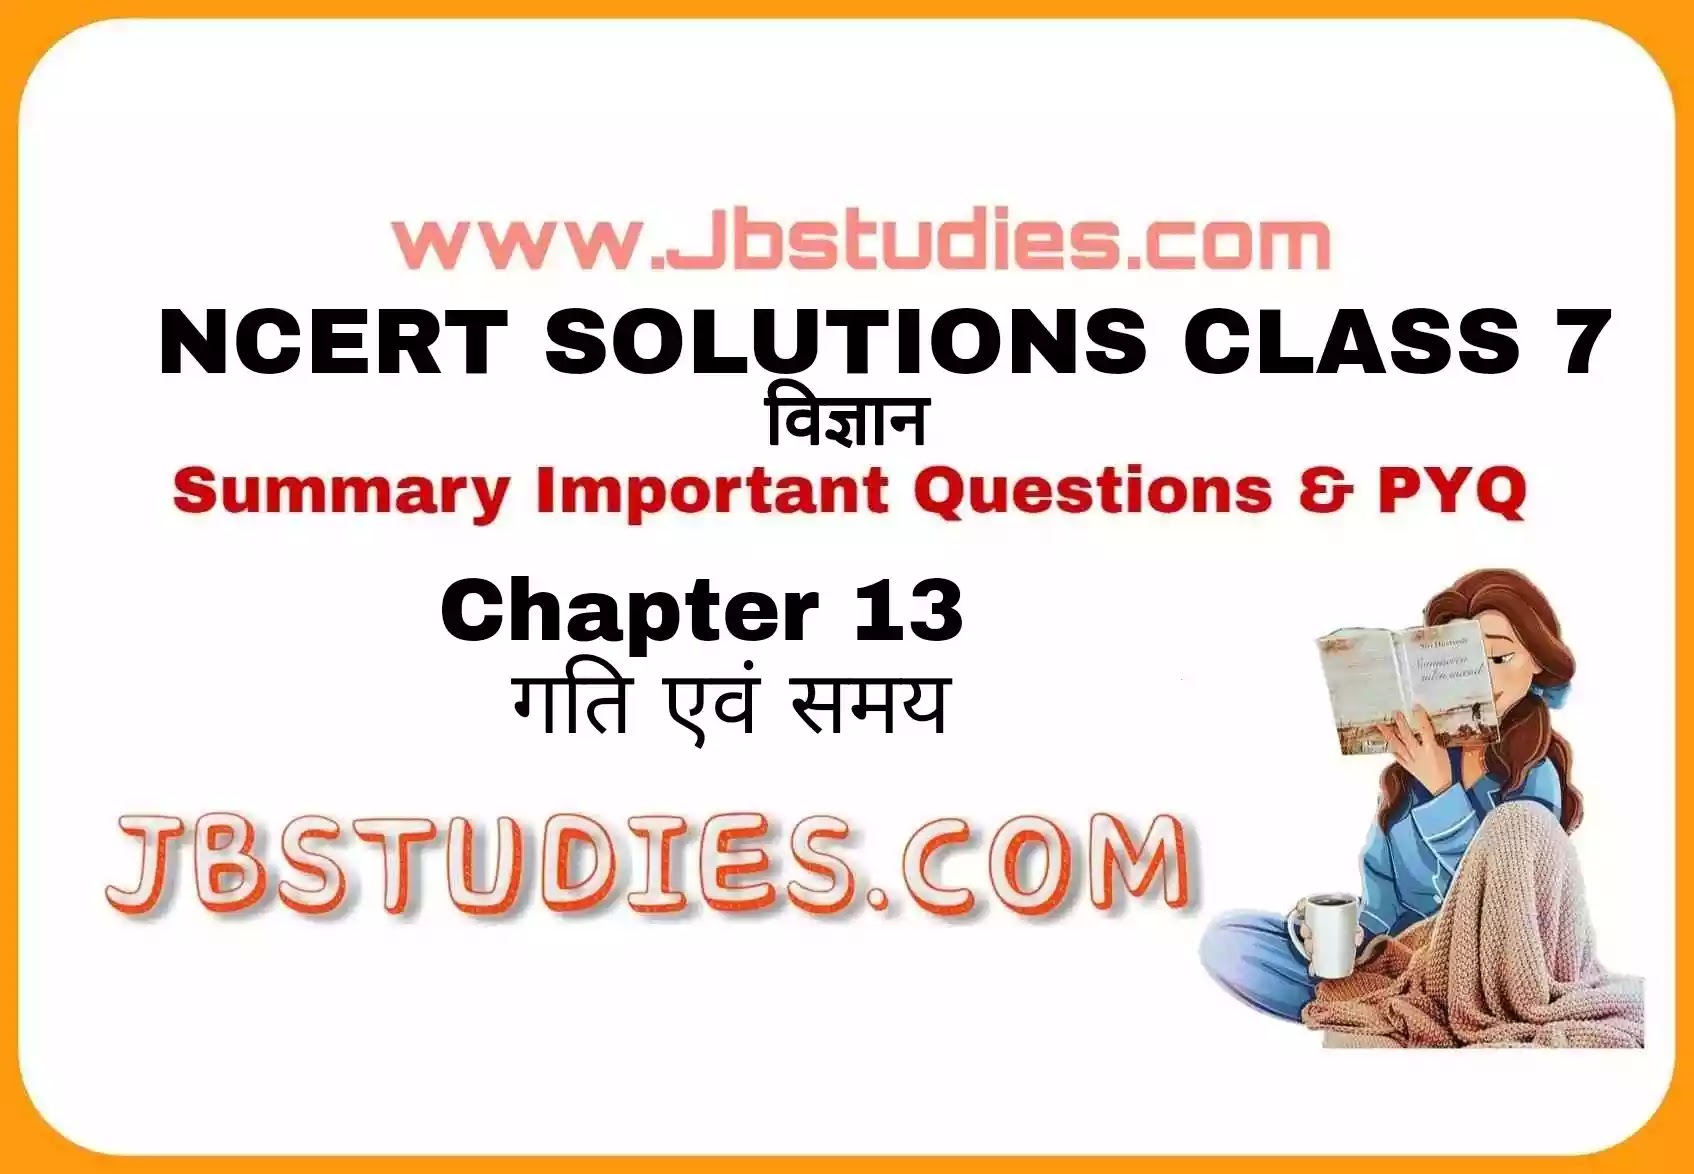 Solutions Class 7 विज्ञान Chapter-13 (गति एवं समय)